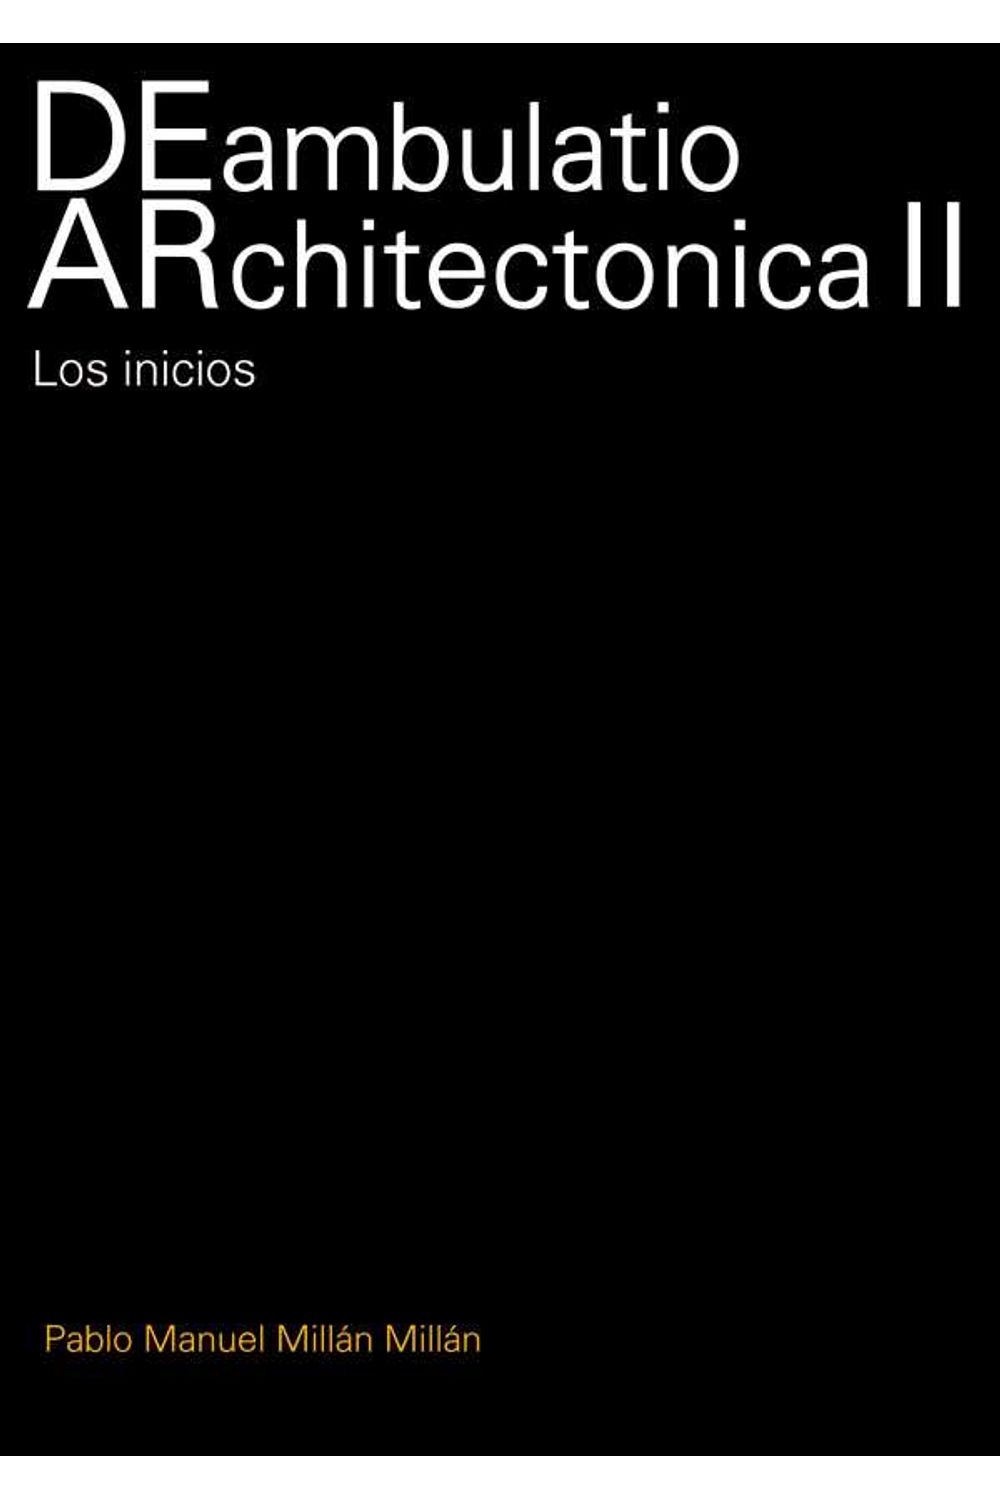 bm-deambulatio-architectonica-2-nobukodiseno-editorial-9781643605838